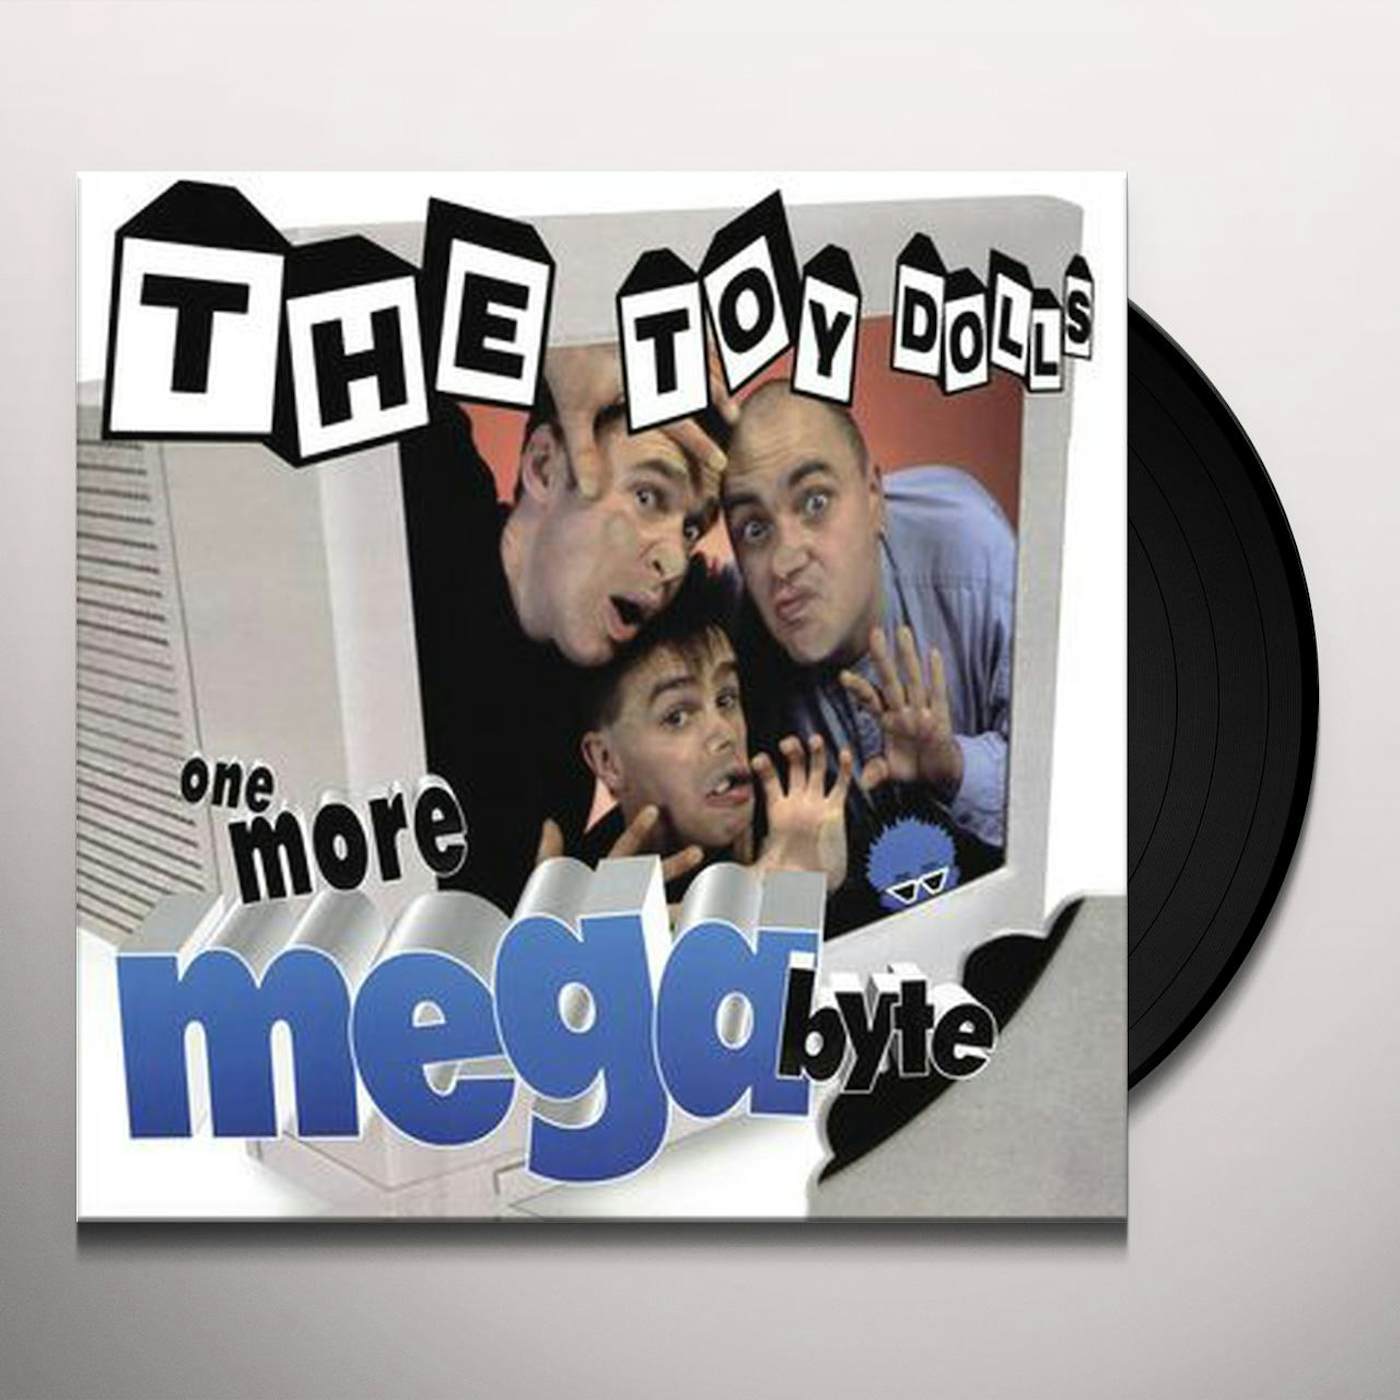 The Toy Dolls One More Megabyte Vinyl Record